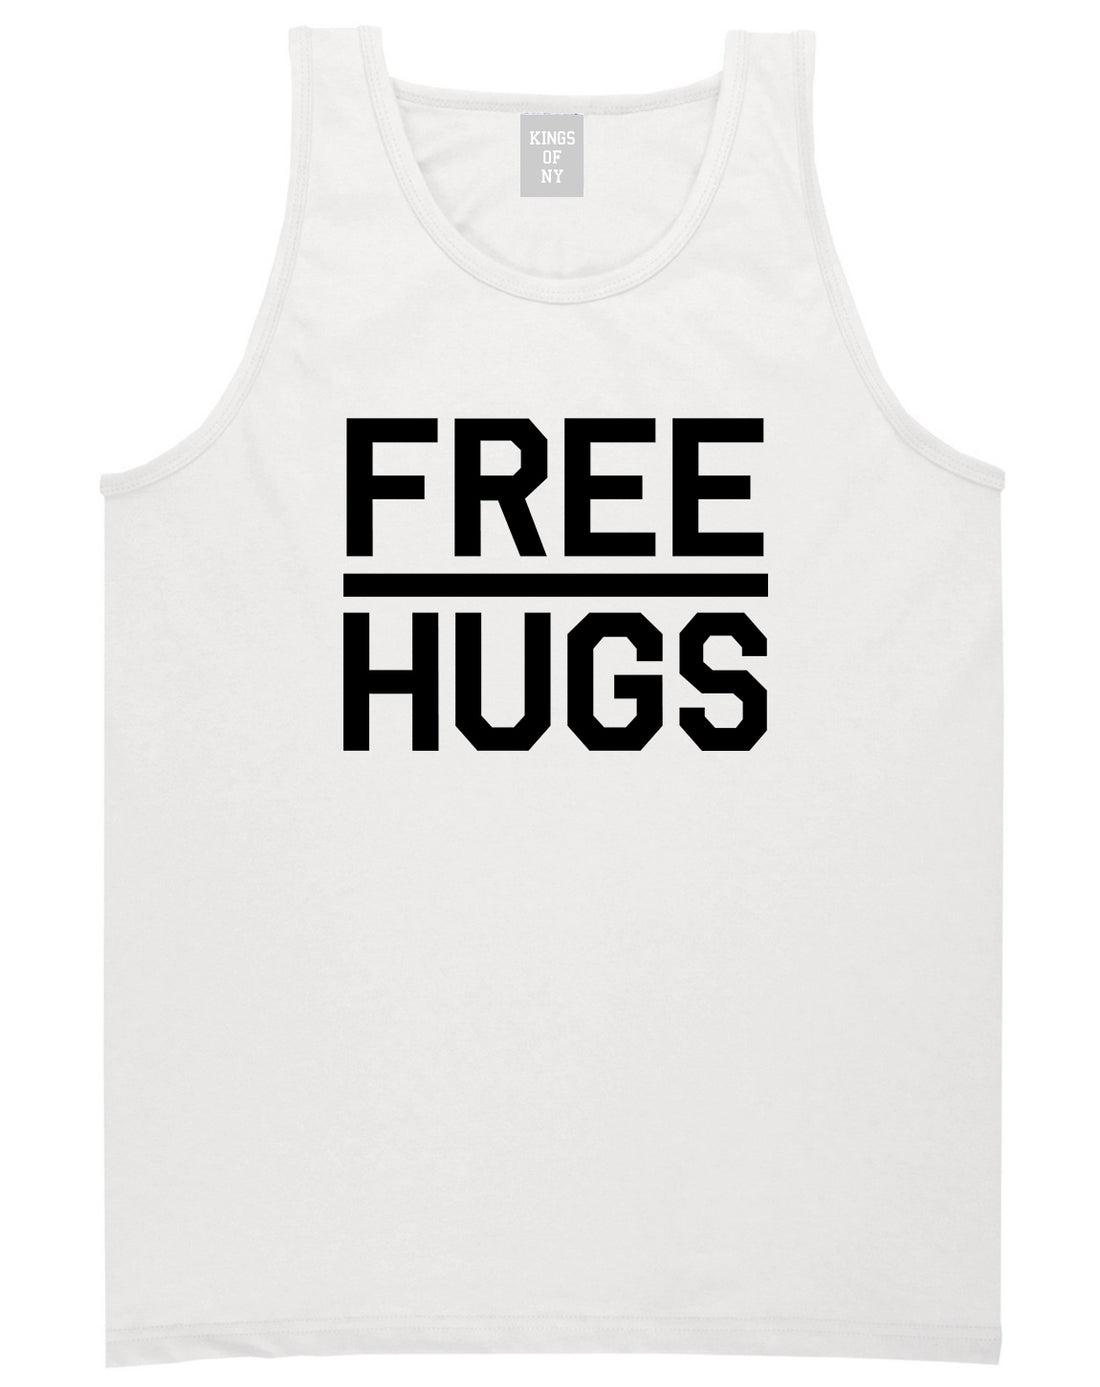 Free Hugs Funny Mens White Tank Top Shirt by KINGS OF NY